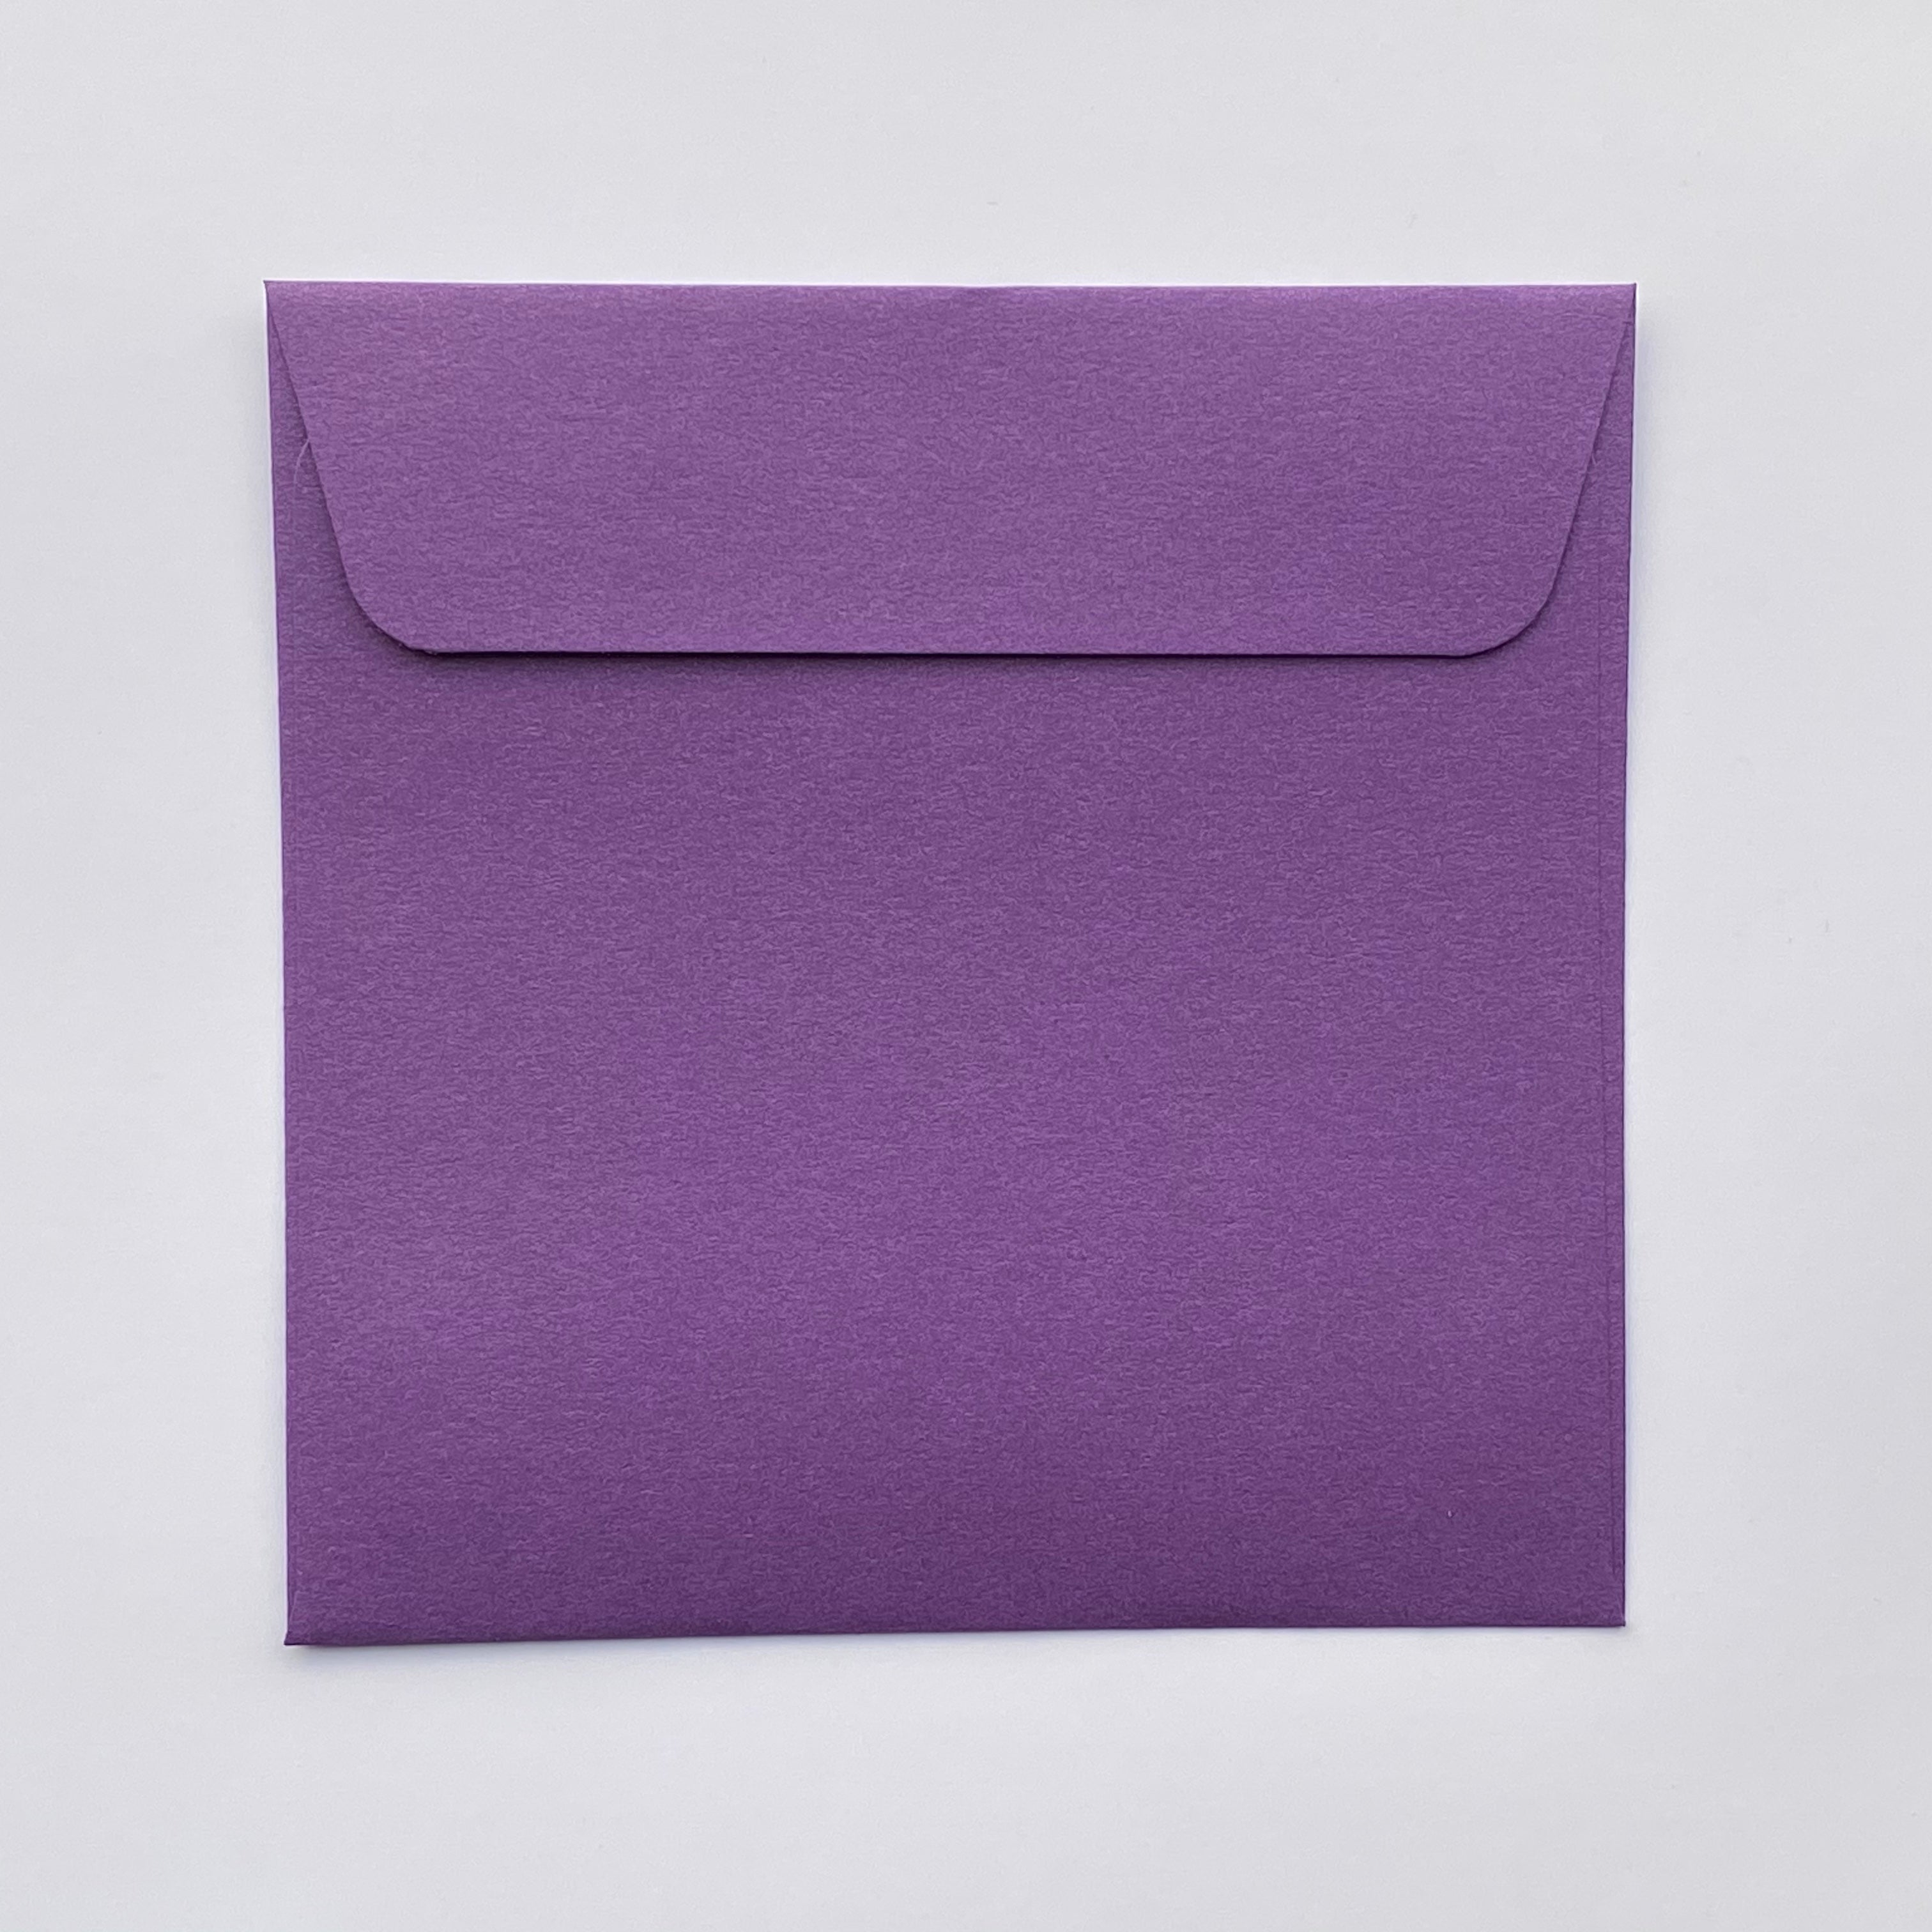 155mm square metallic envelopes